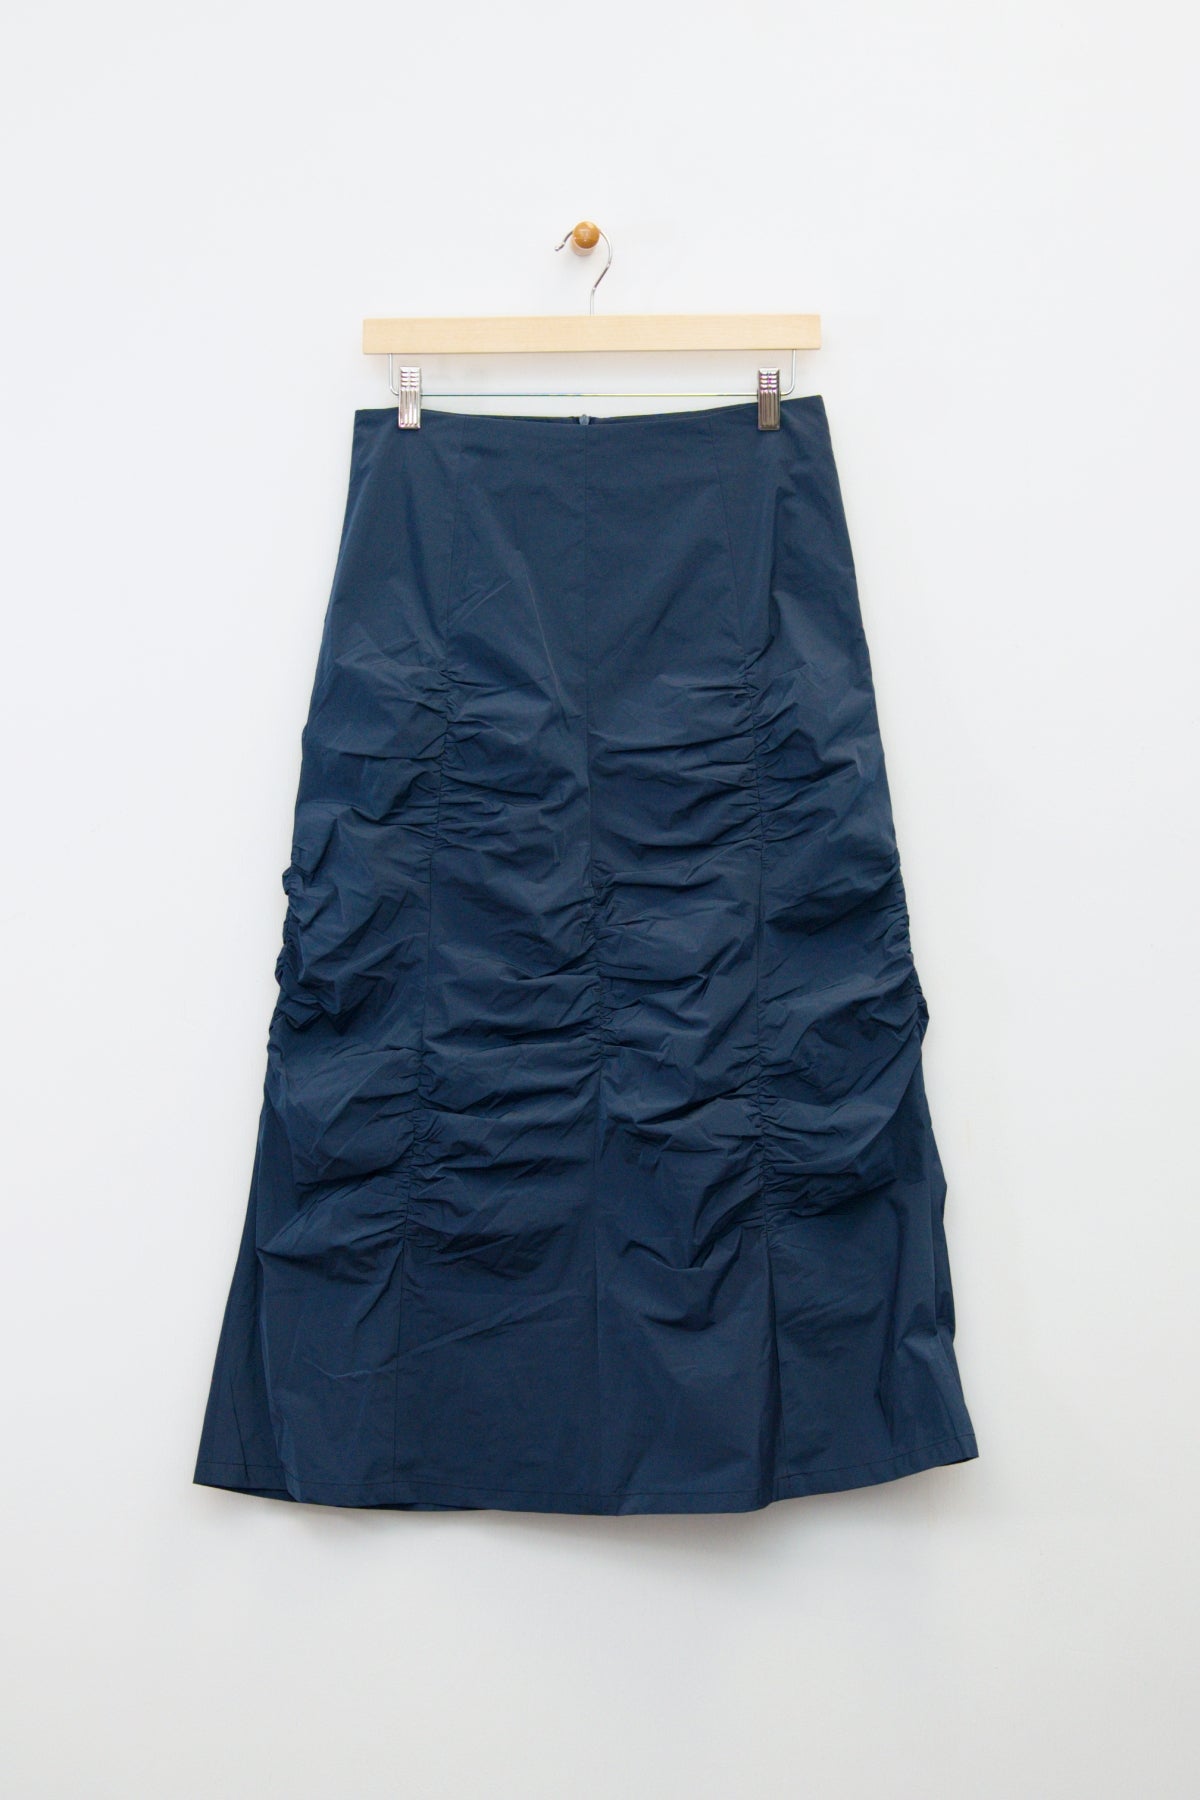 36" Gathered Taffeta Skirt